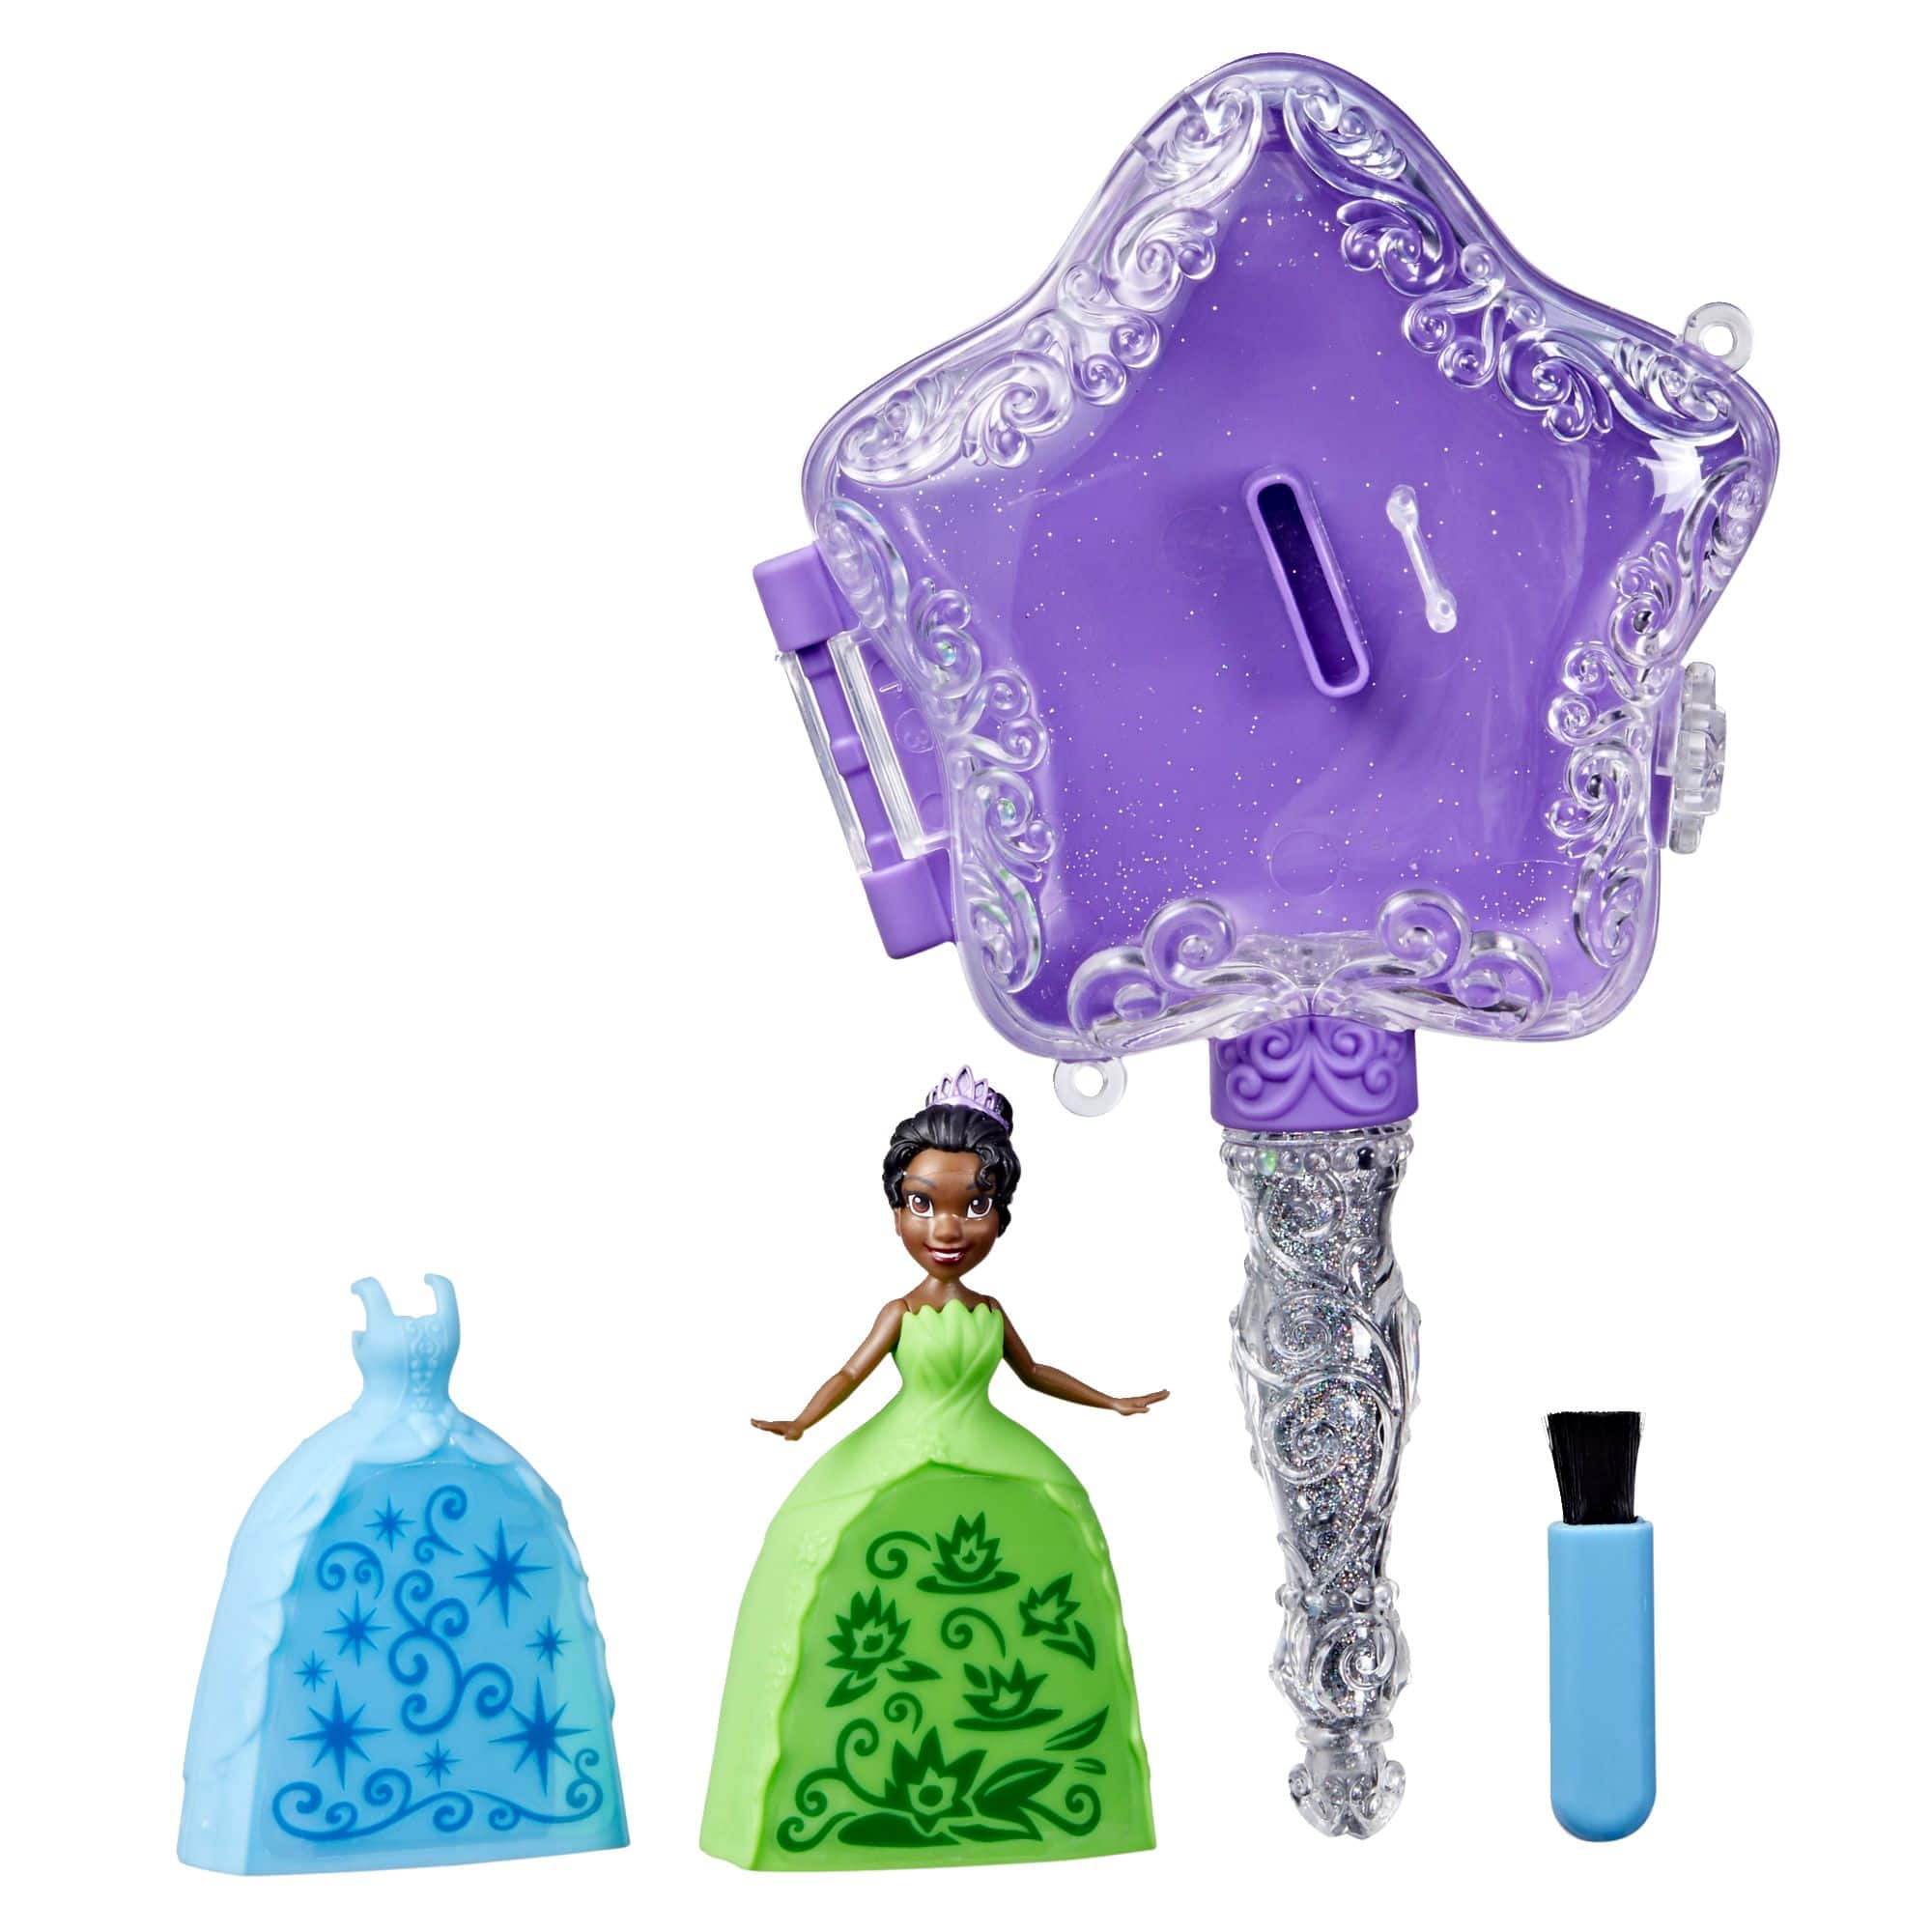 Disney Princess Secret Styles Magic Glitter Wand Doll, Assorted, Age 4+